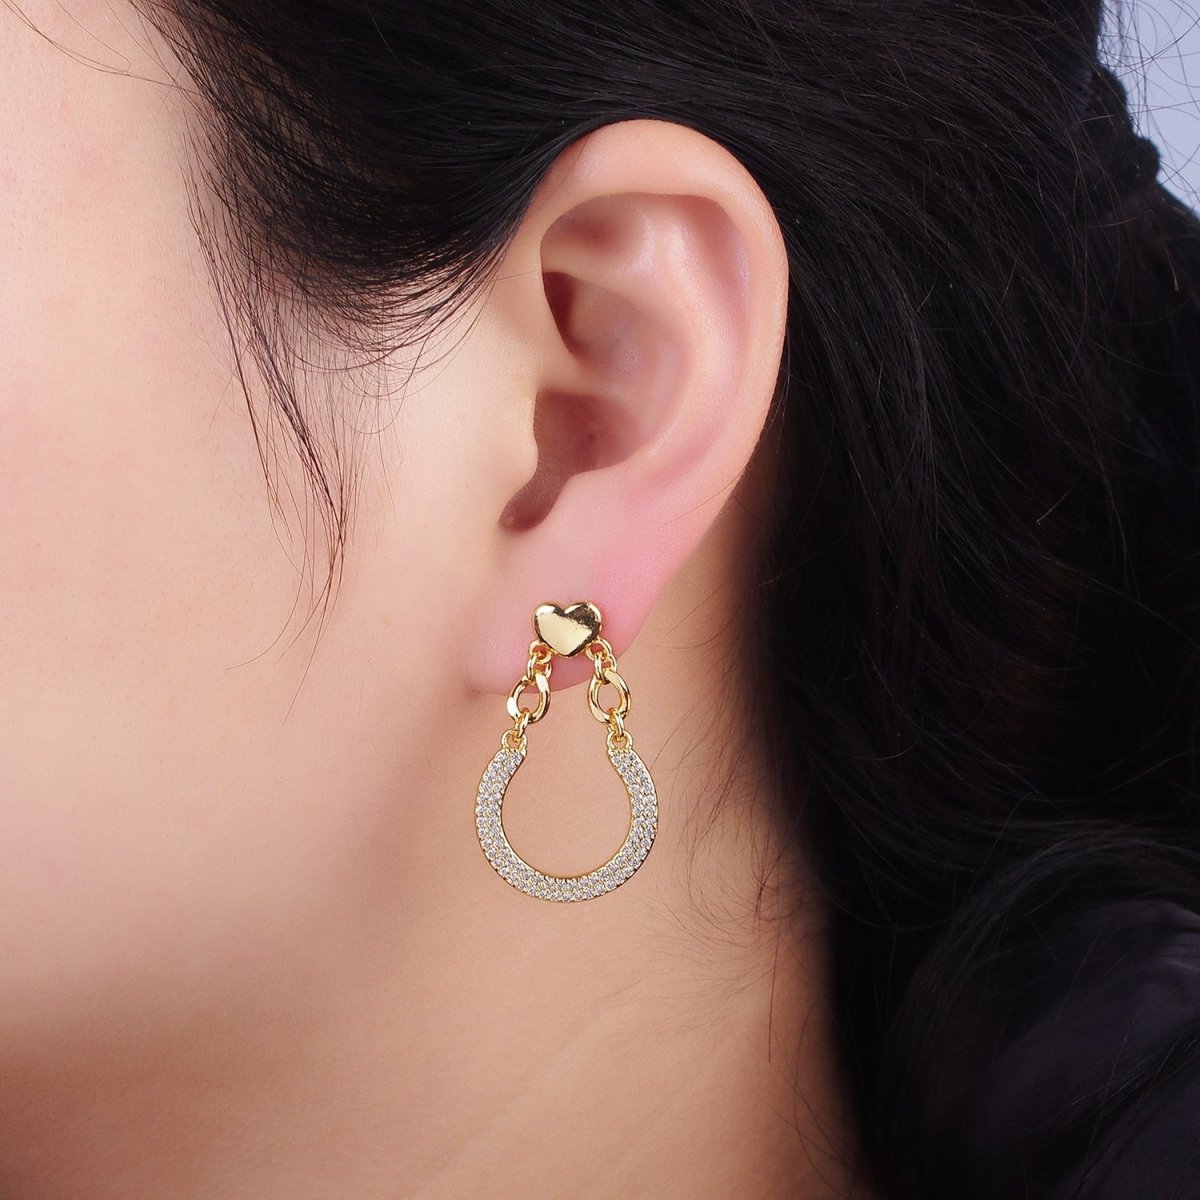 Big Horseshoe Stud Earring in 14k Gold Filled Equestrian Jewelry | AE483 - DLUXCA